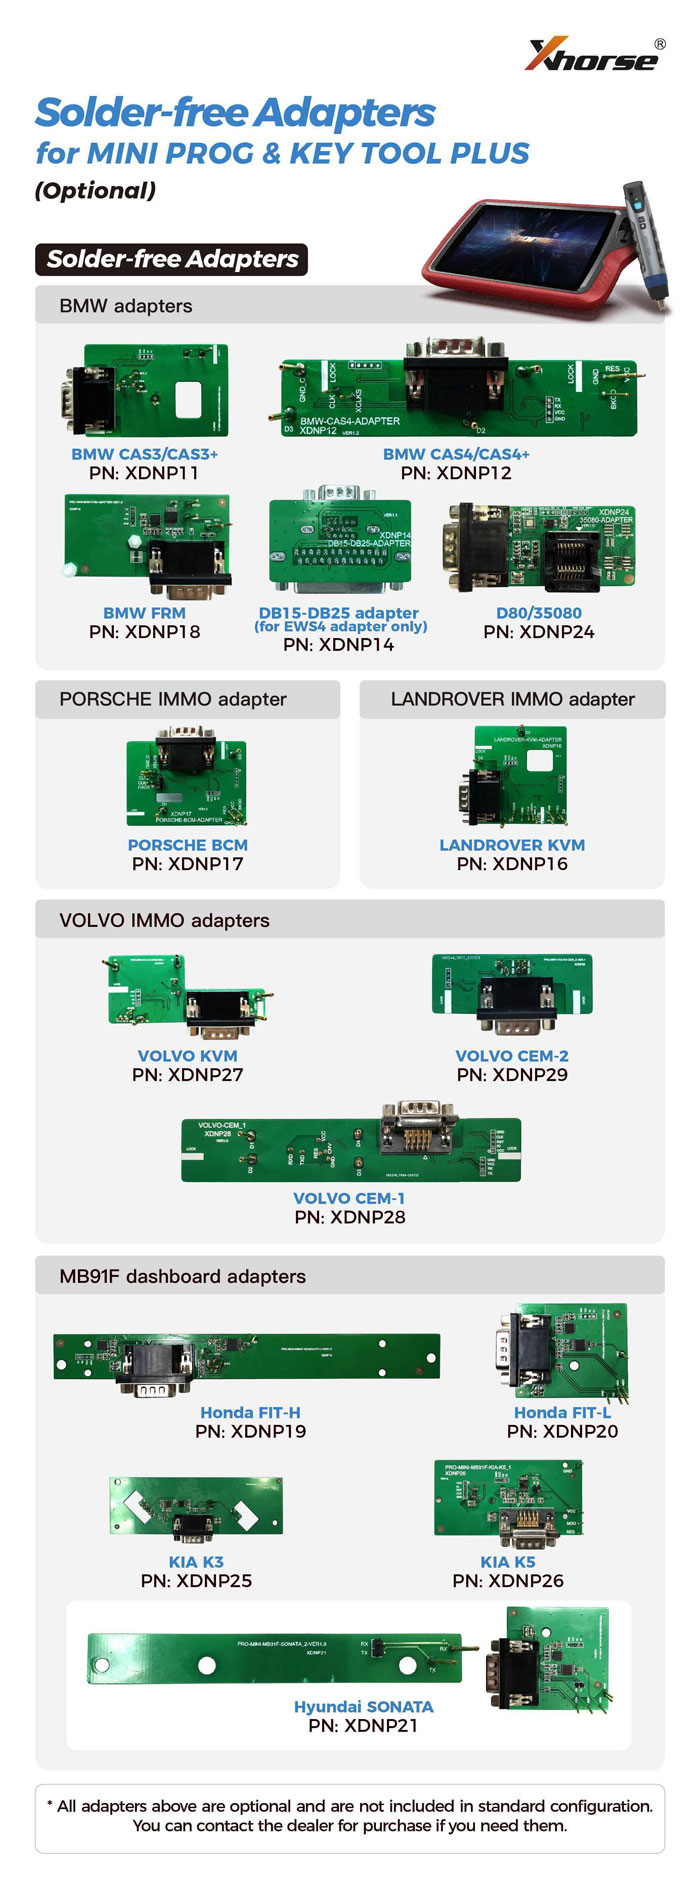 xhorse-solder-free-adapters-full-set